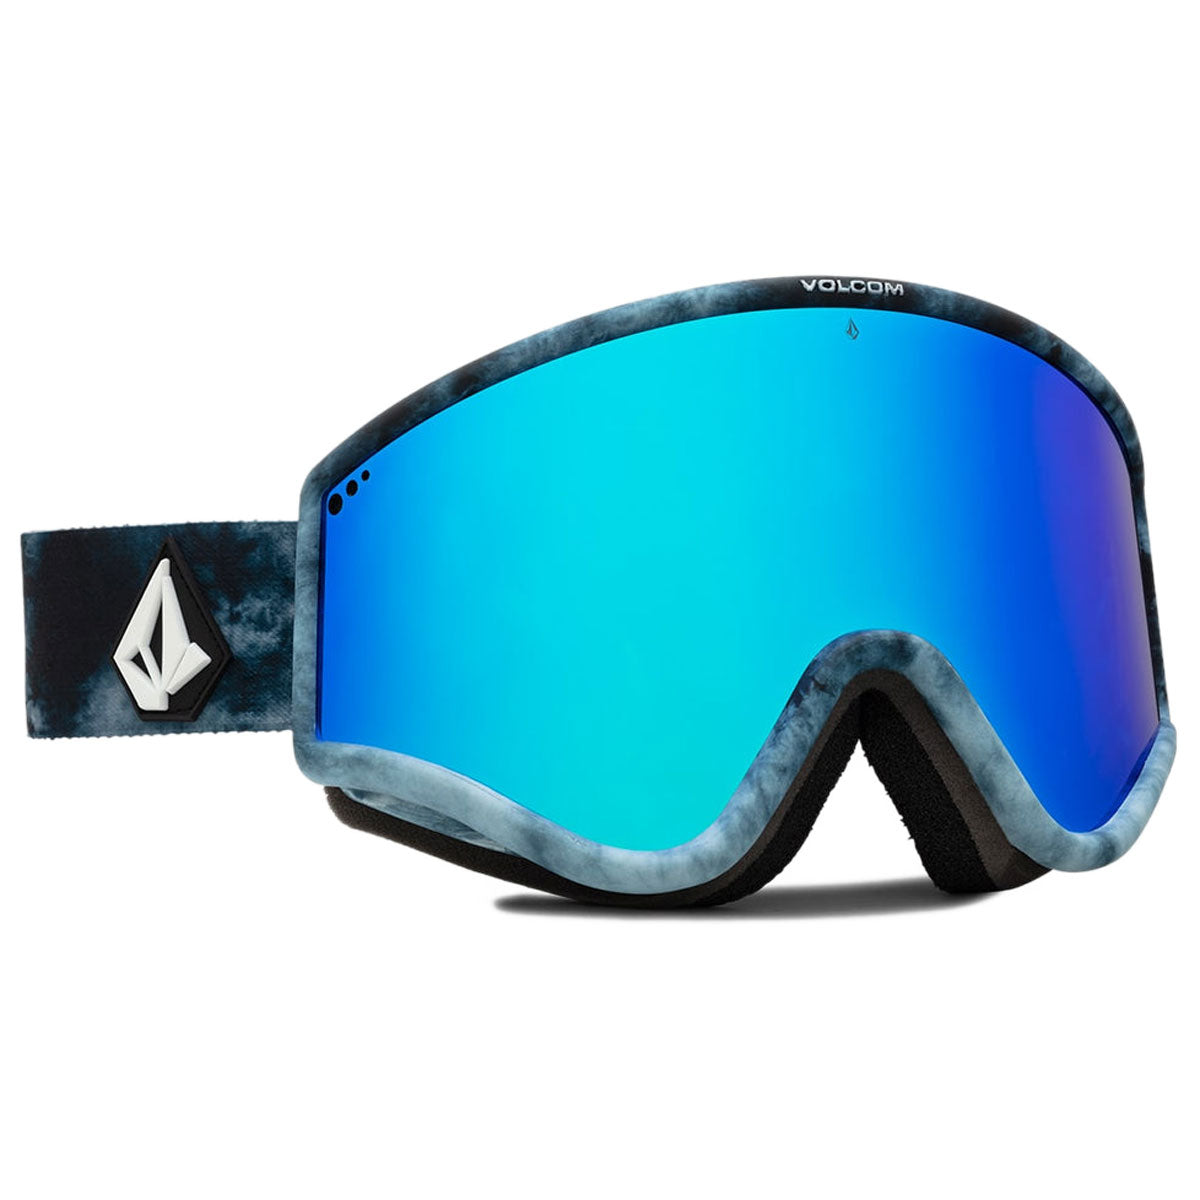 Volcom Yae Snowboard Goggles - Lagoon/Blue Chrome image 3